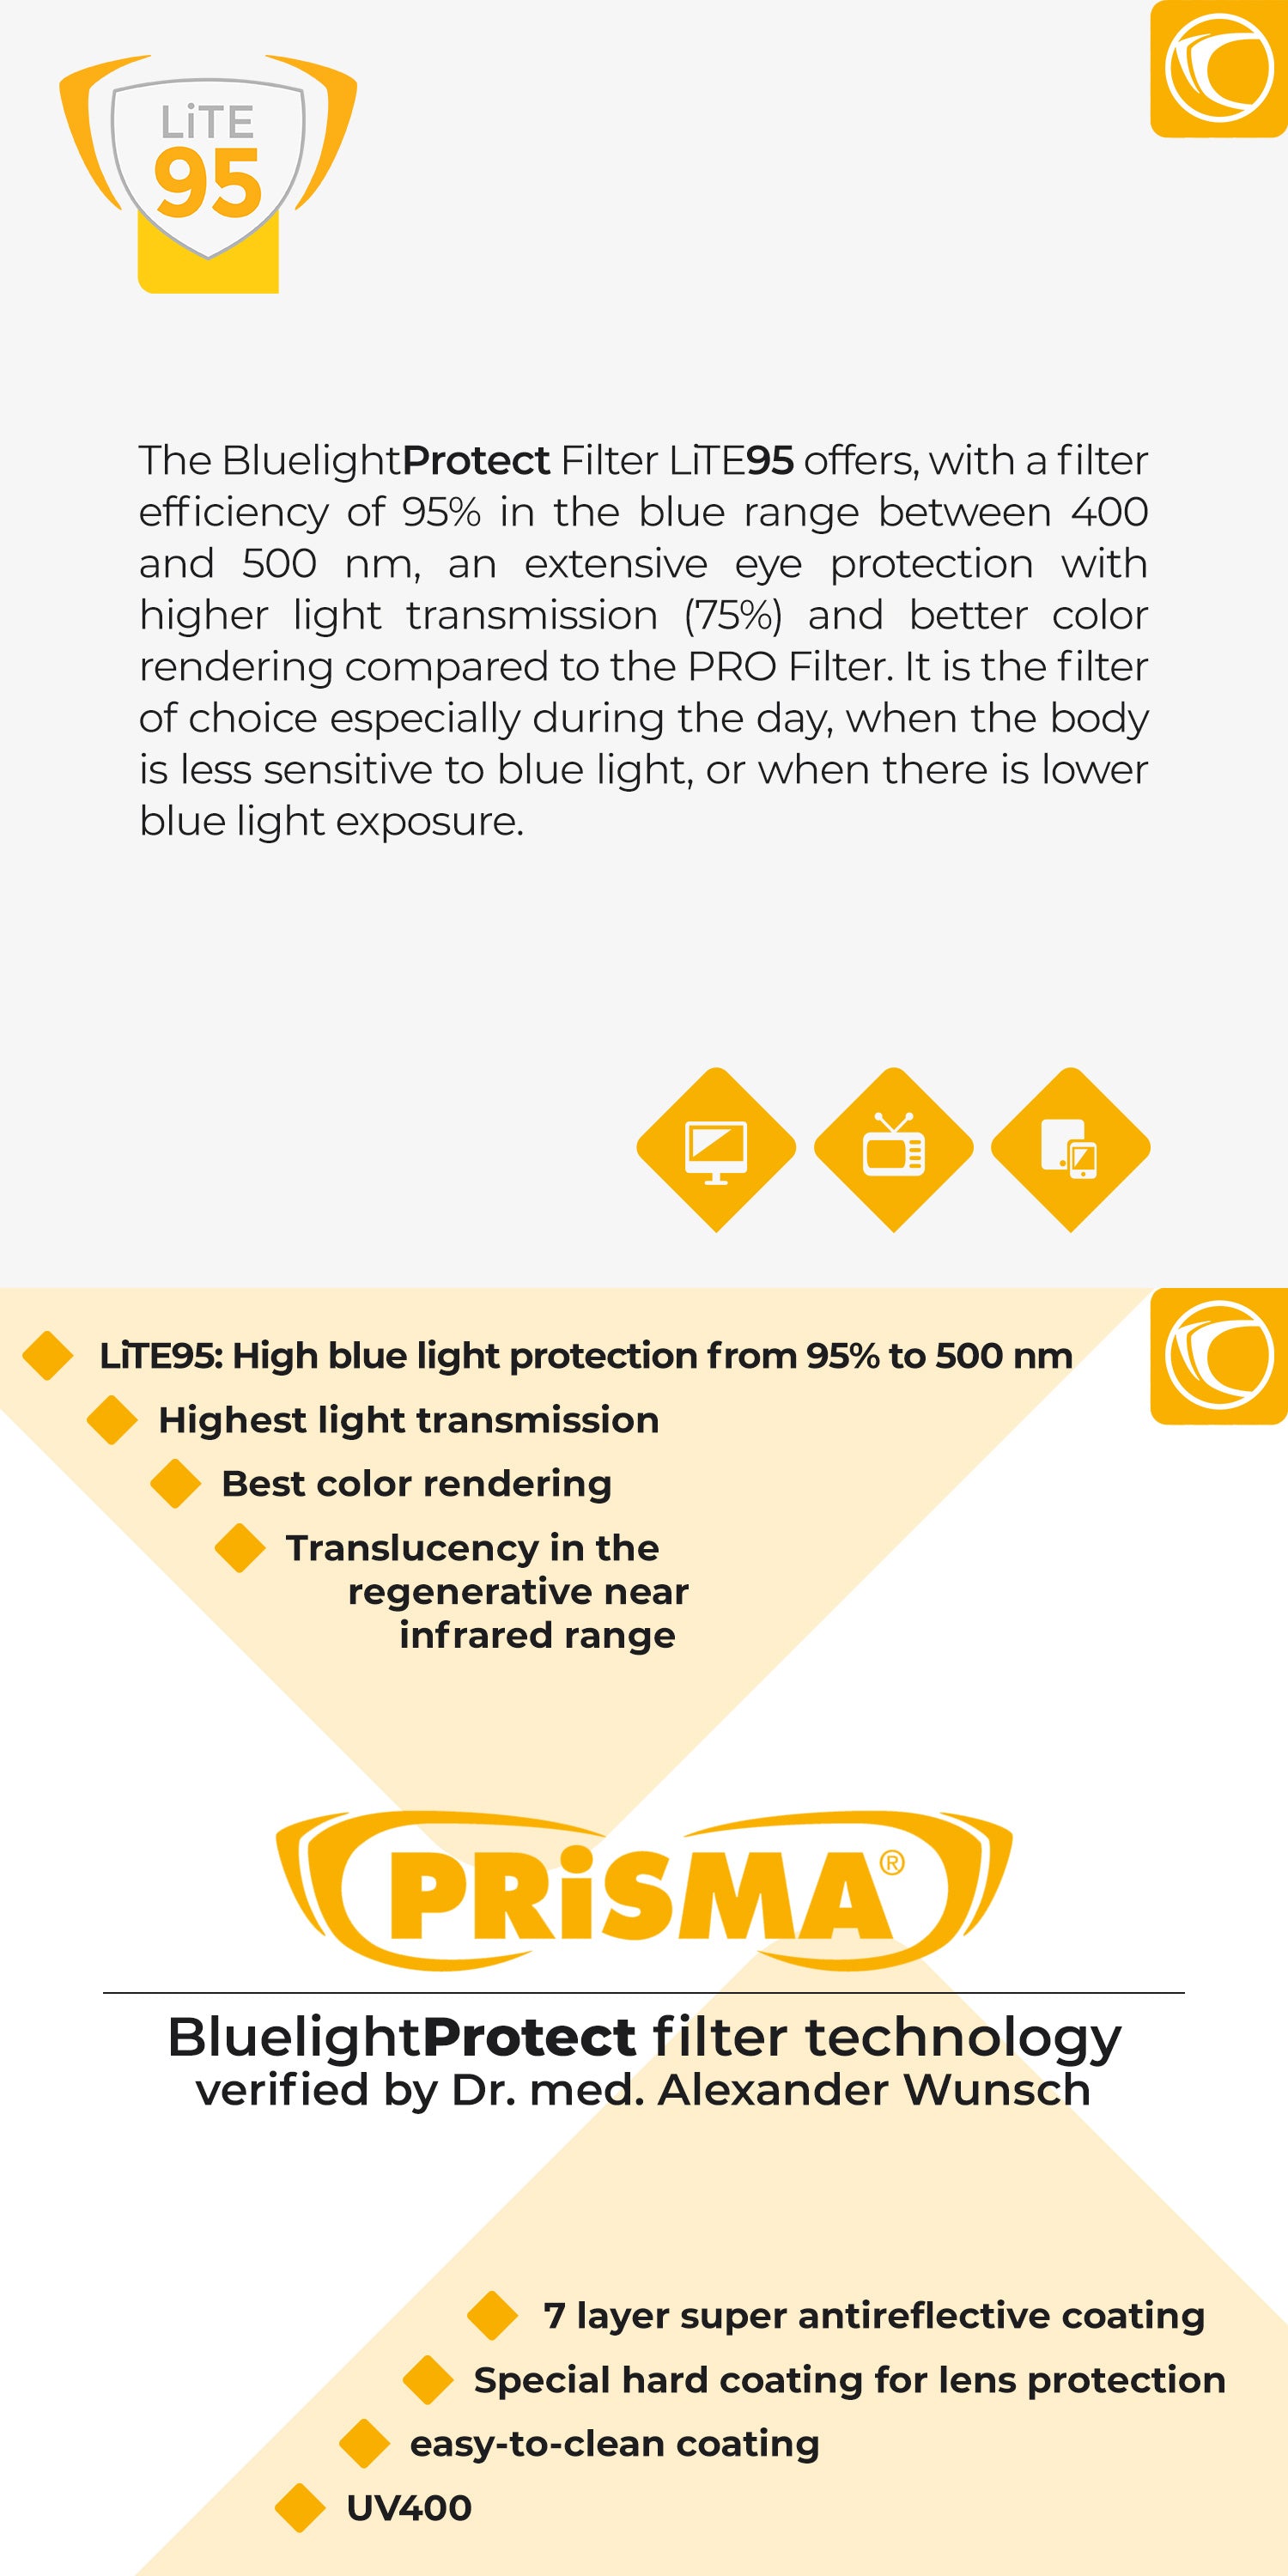 PRiSMA Blue Blocking Glasses - LiMBURG  LiTE